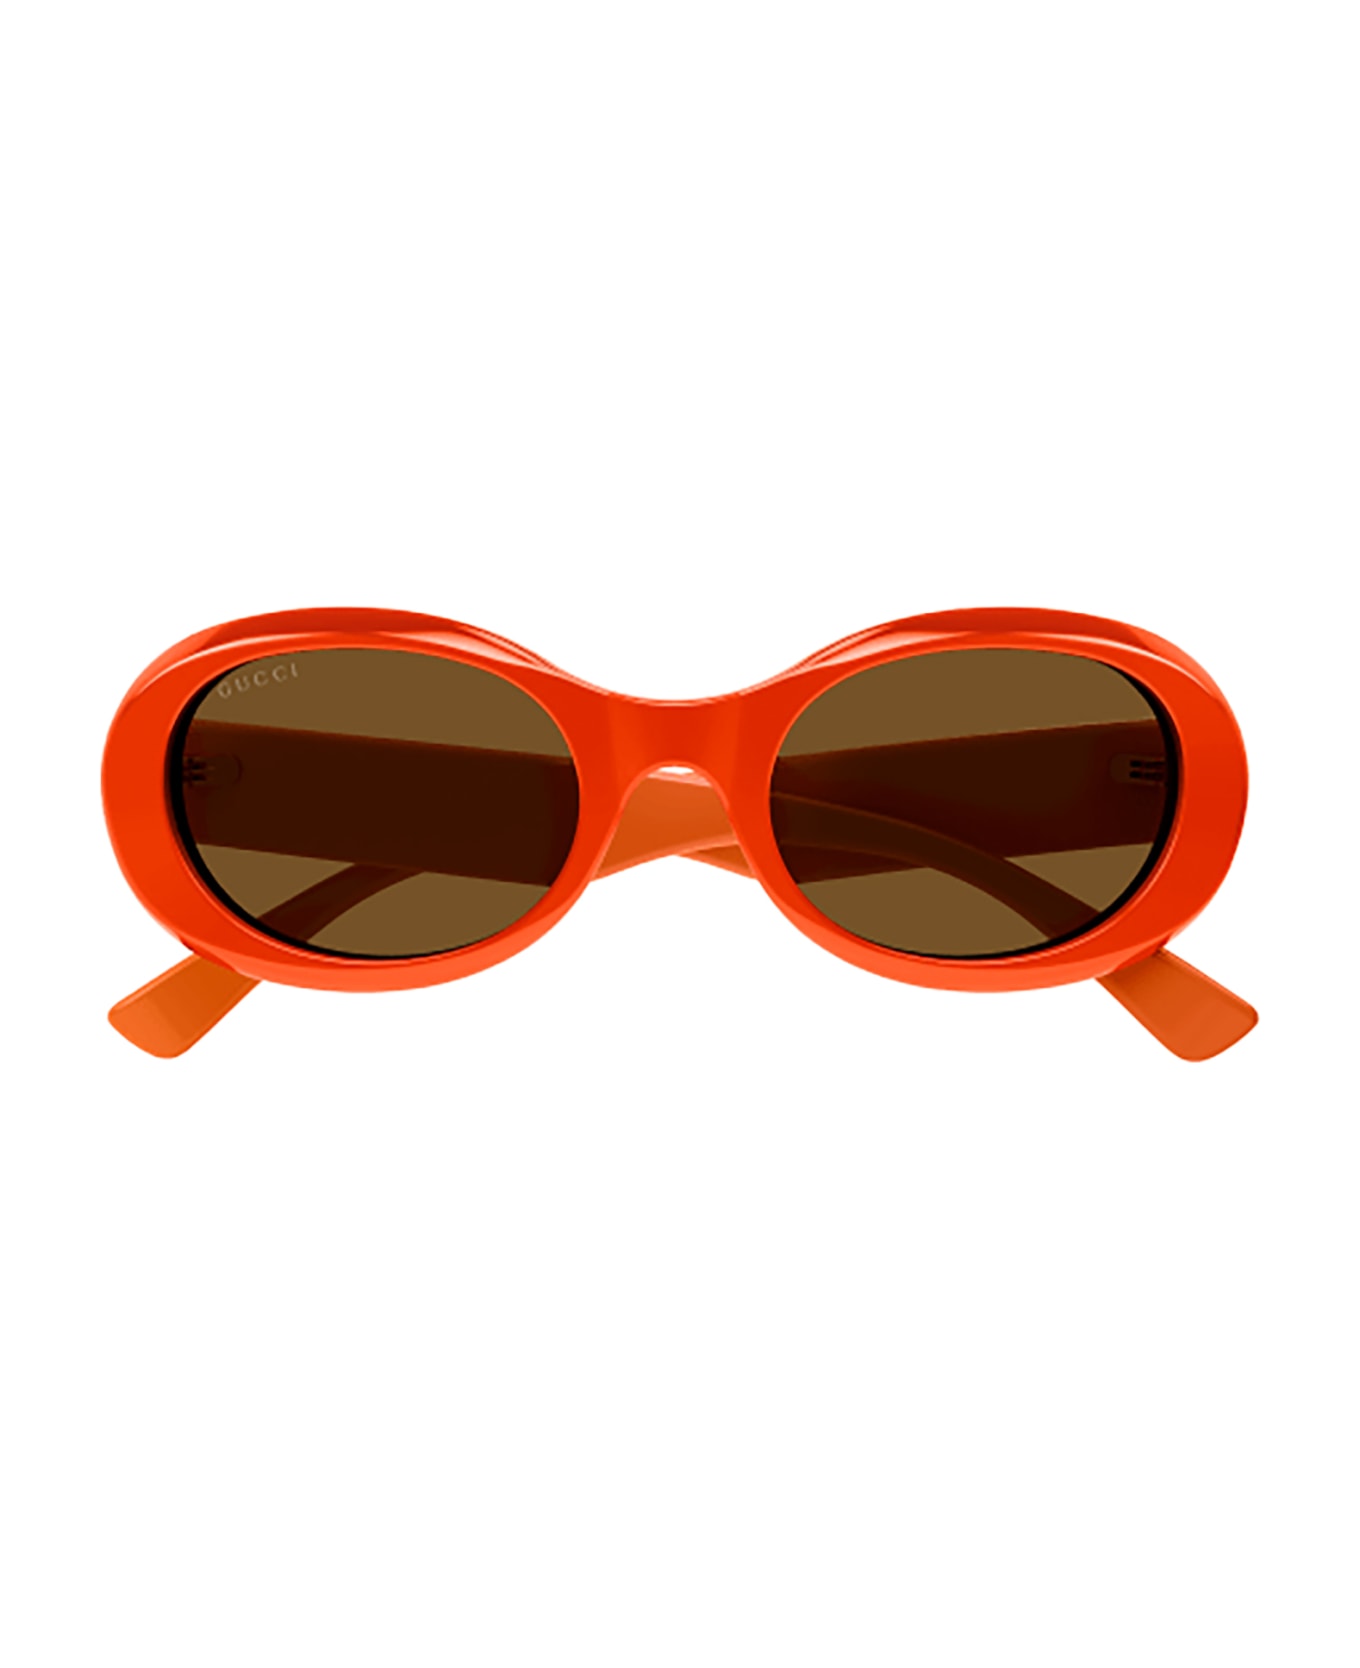 Gucci Eyewear GG1587S Sunglasses brow - goodr devil wears runways sunglasses